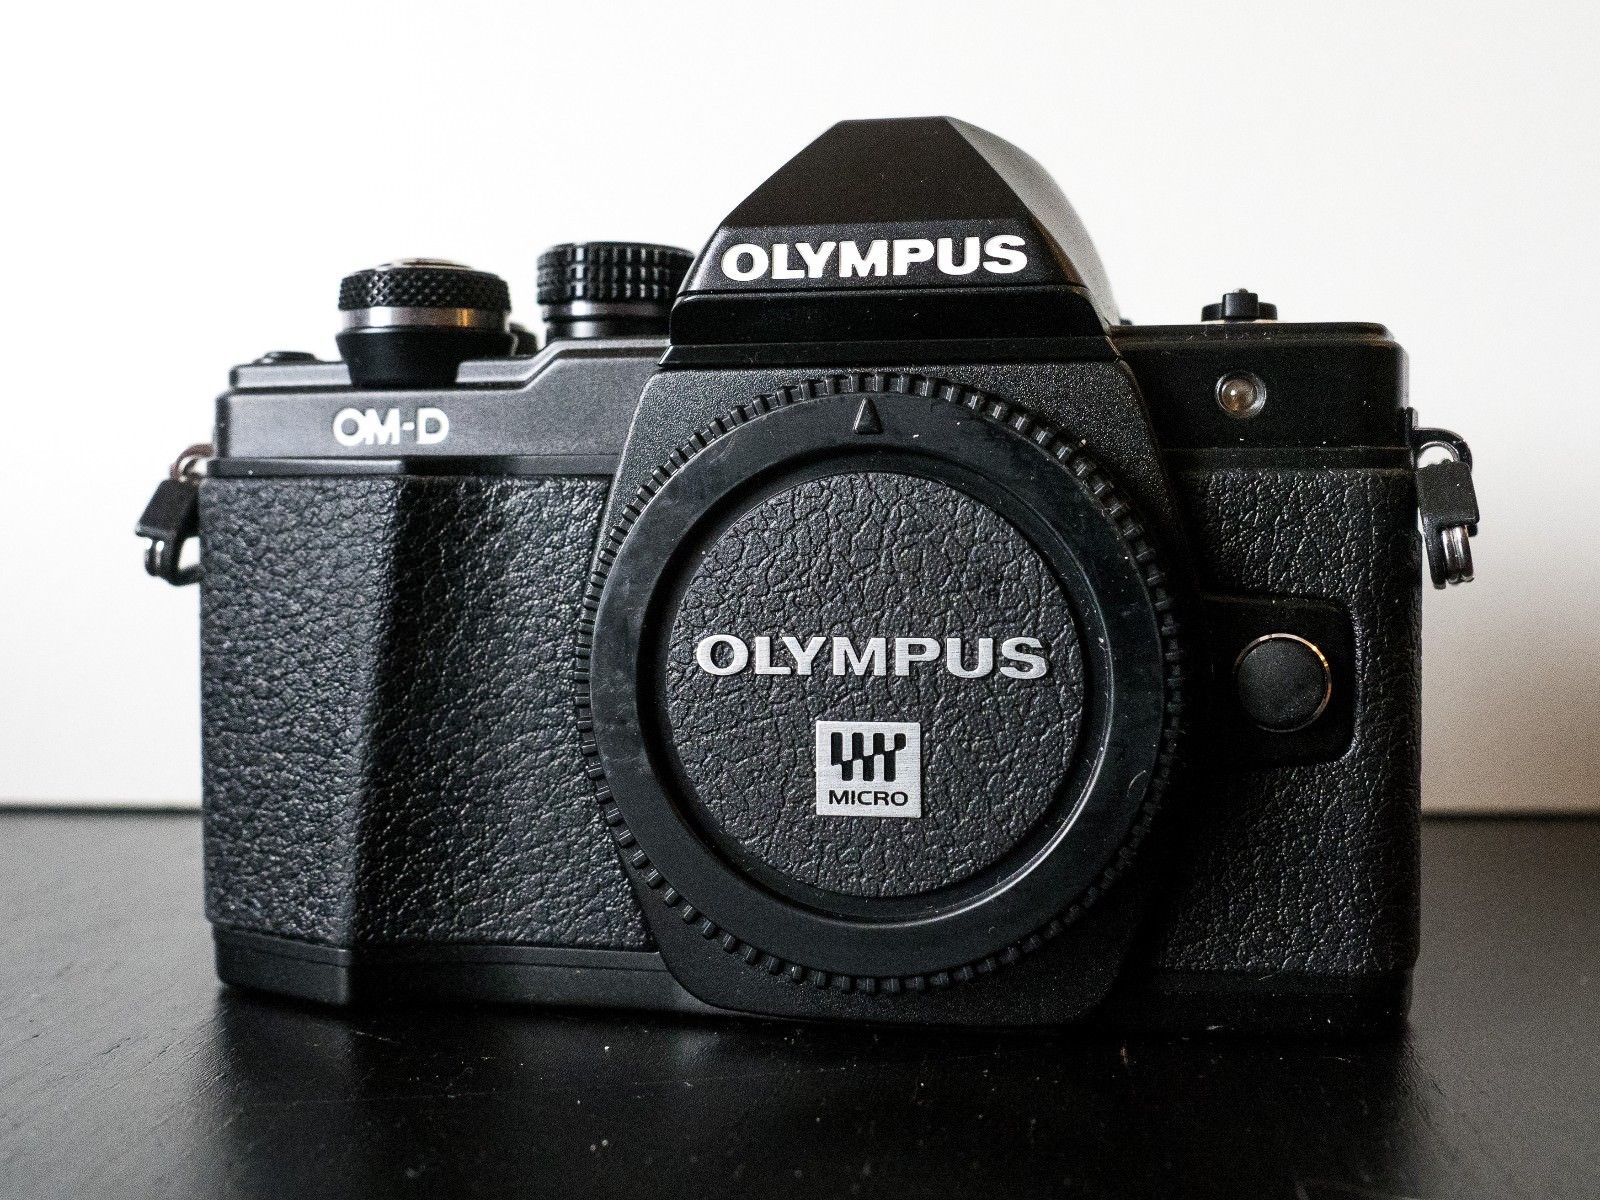 Olympus OM-D E-M10 Mark II 16.0MP Digitalkamera - Schwarz - neuwertig - OVP